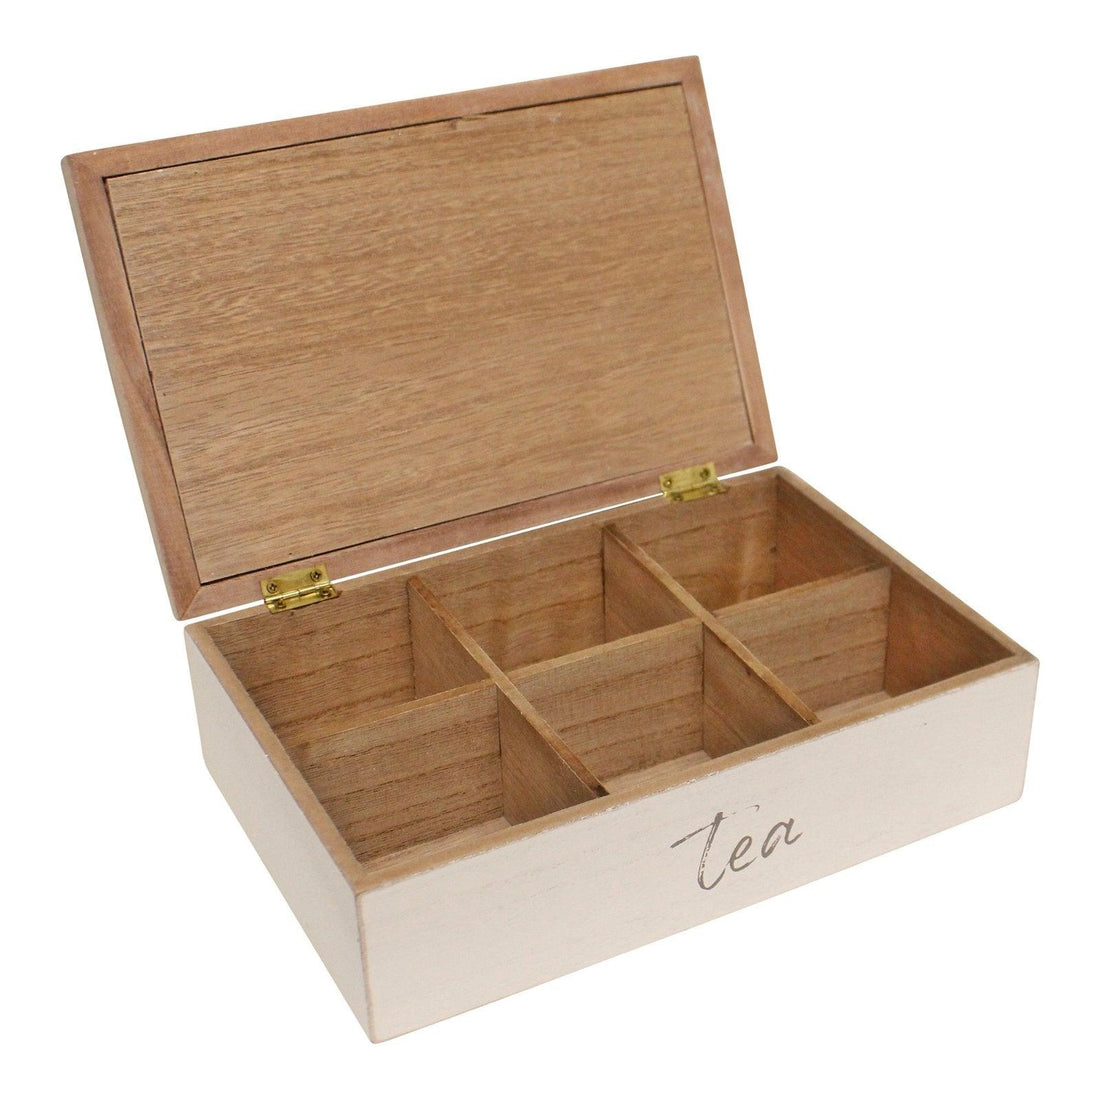 Tea Box, Wooden Houses Design, 24x16cm. - £27.99 - Kitchen Storage 